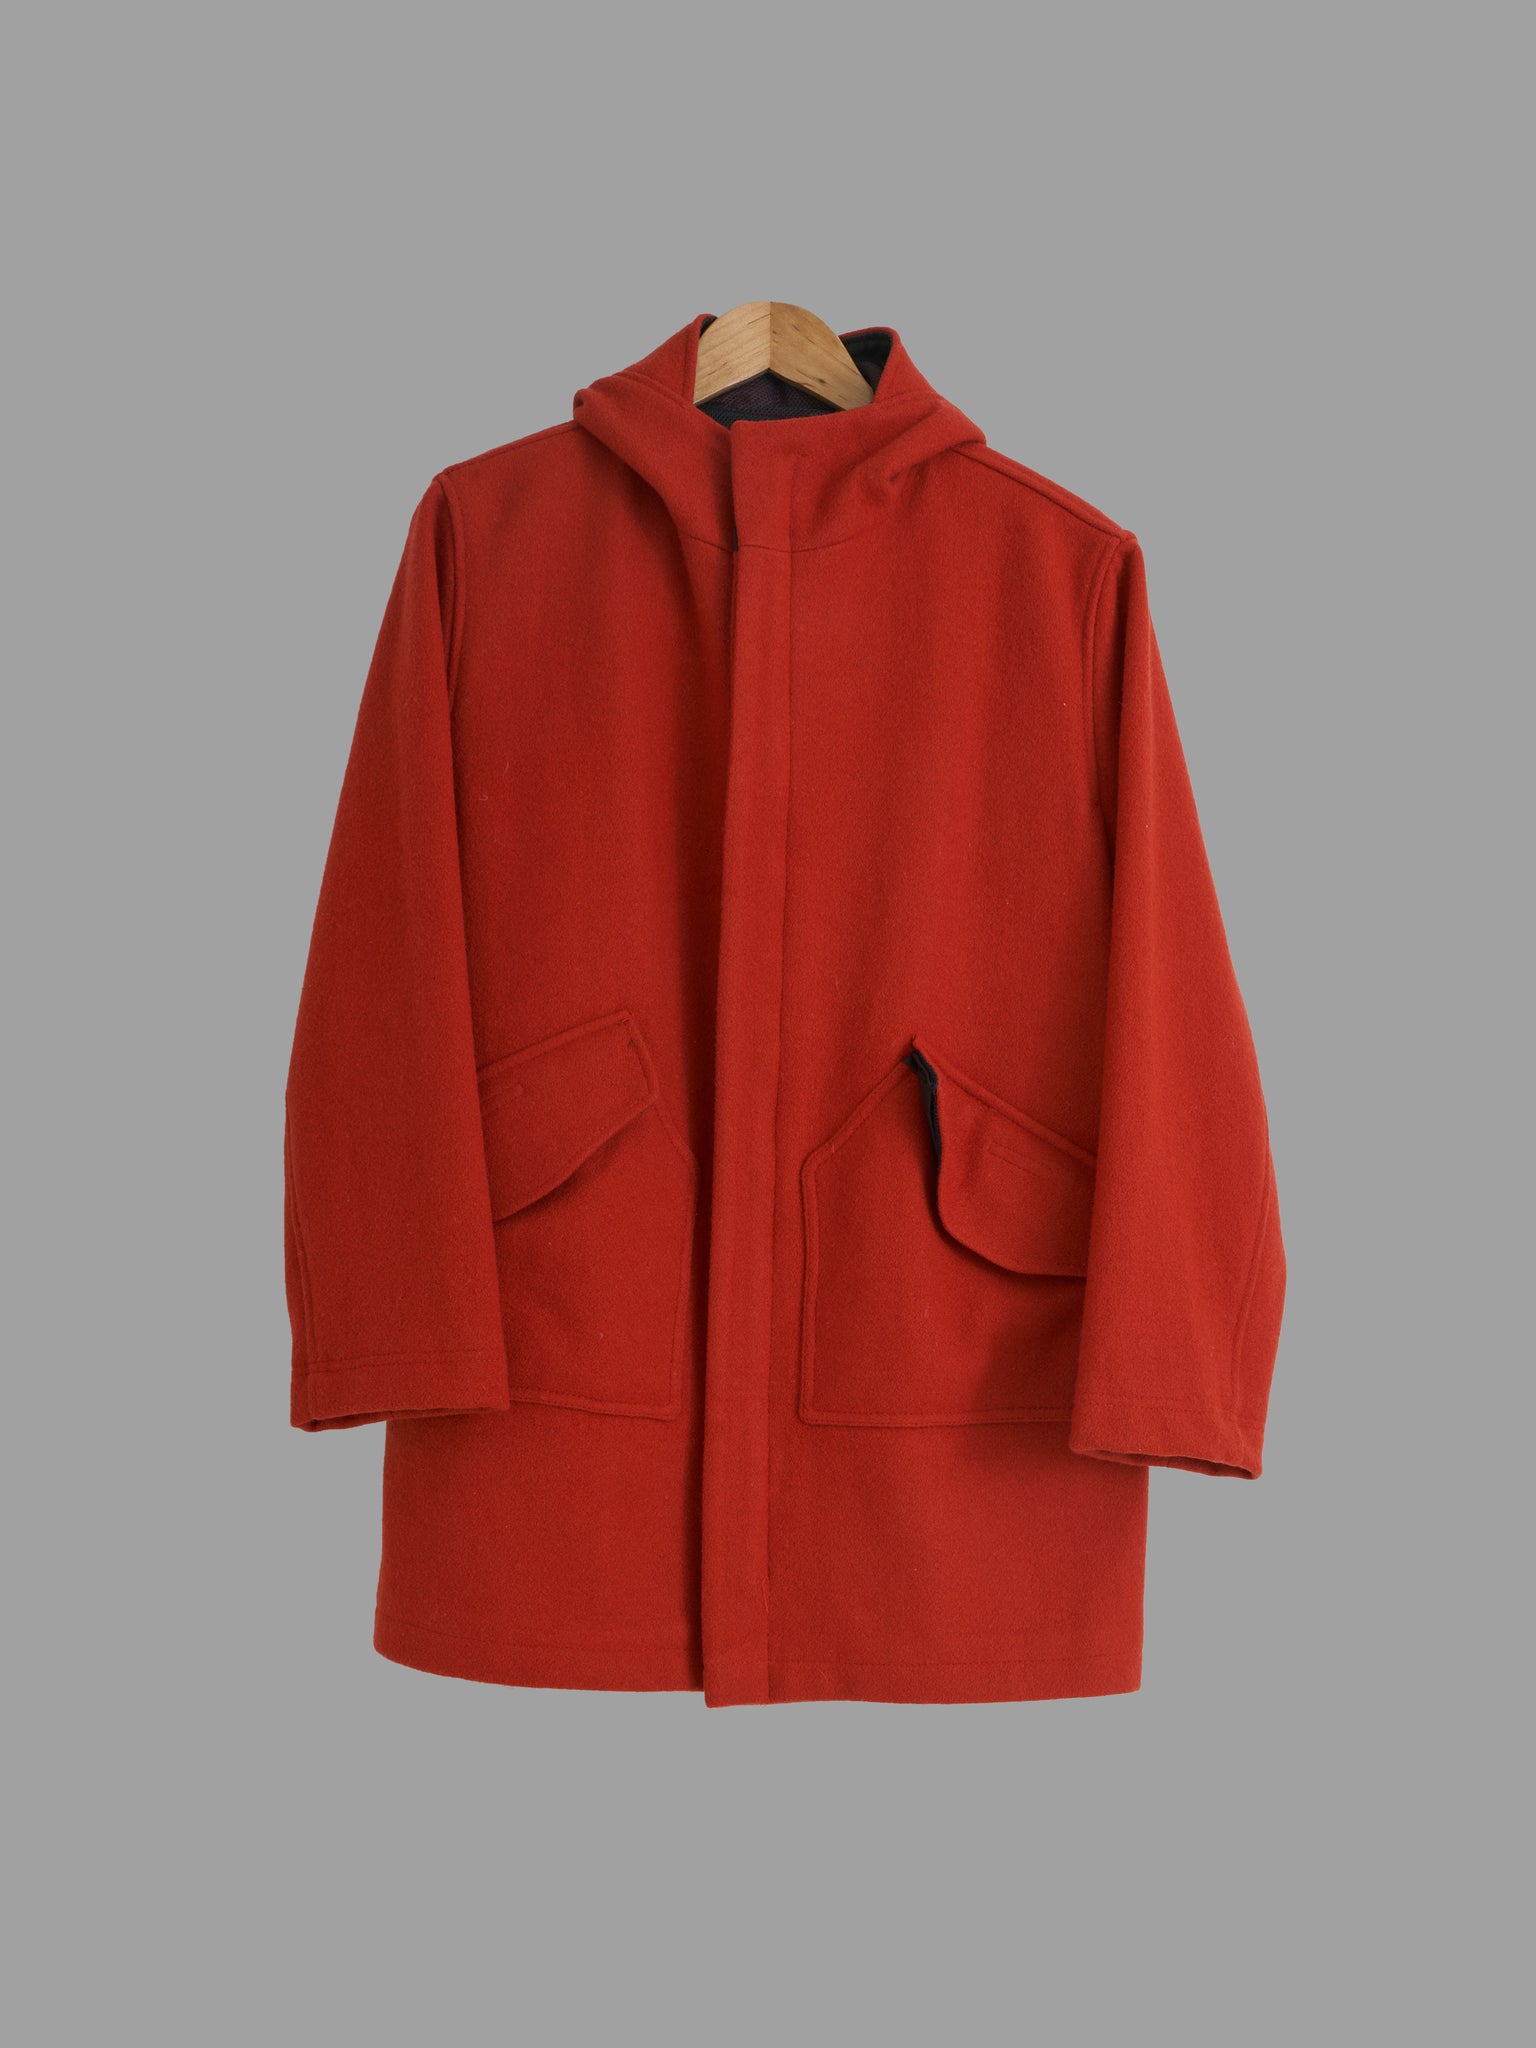 Generic Costume 1990s red wool melton high neck hooded zip coat - mens S XS